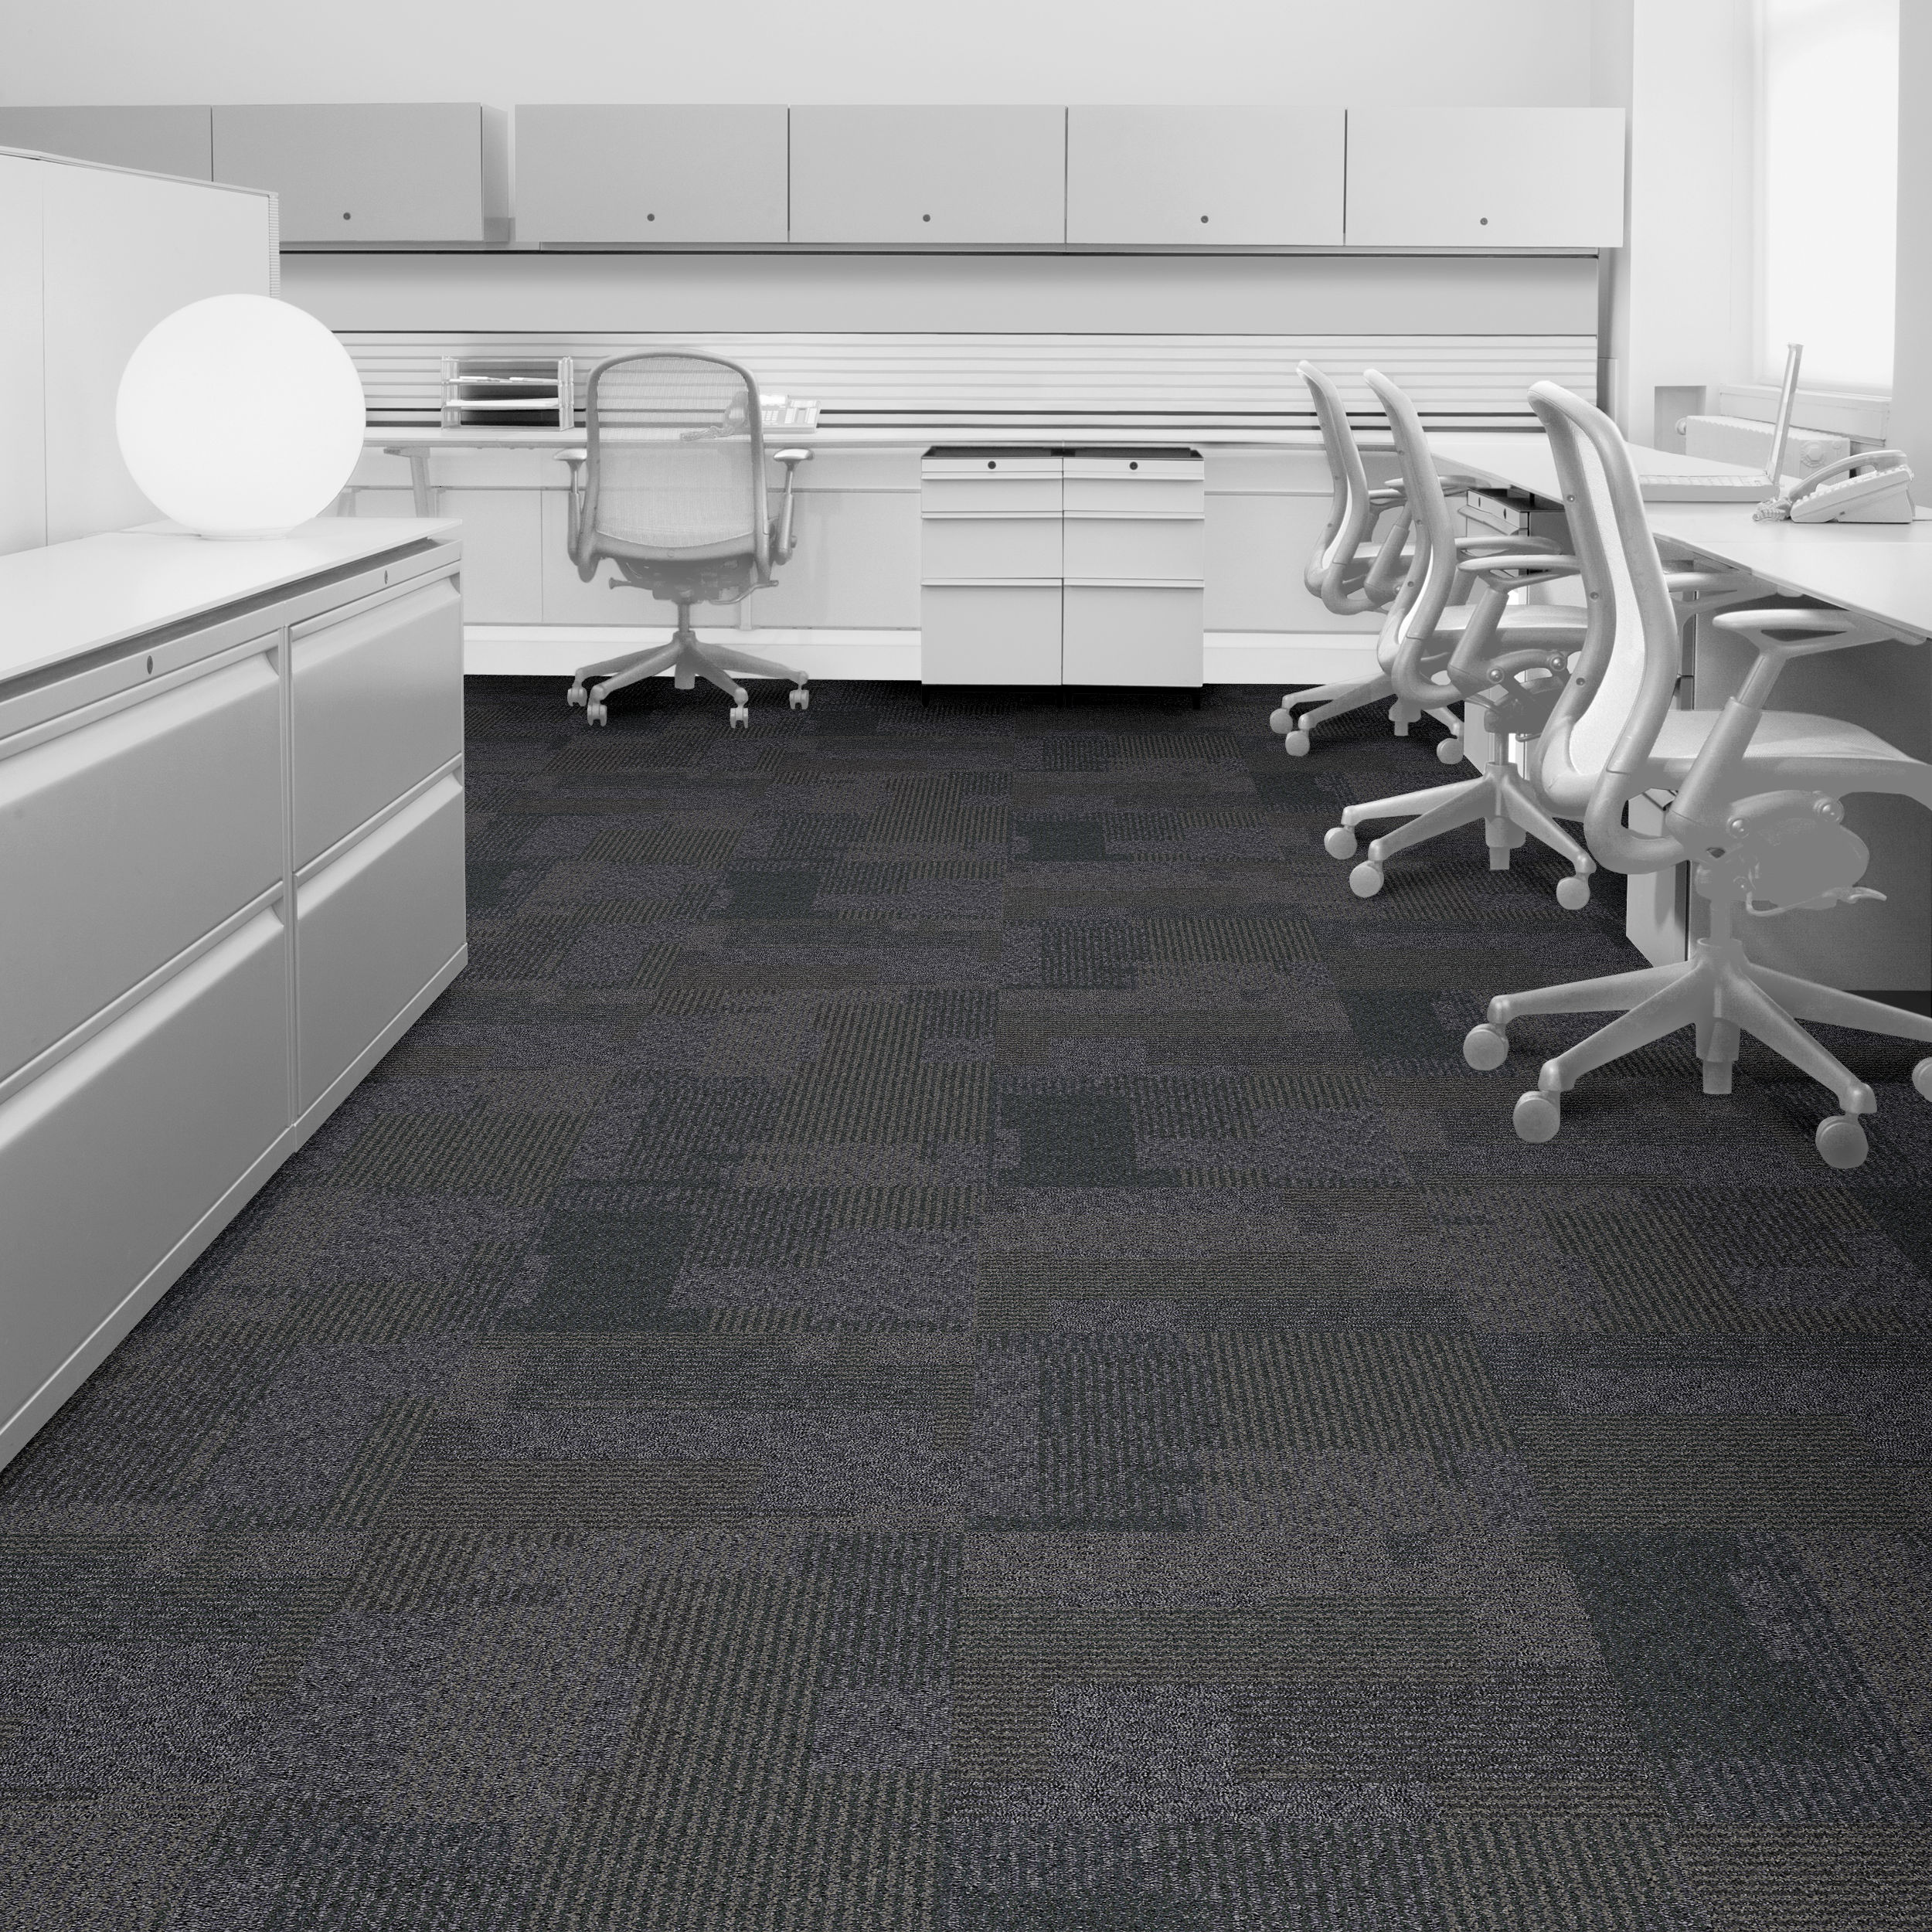 Fern Transformation Carpet Tile in office setting.